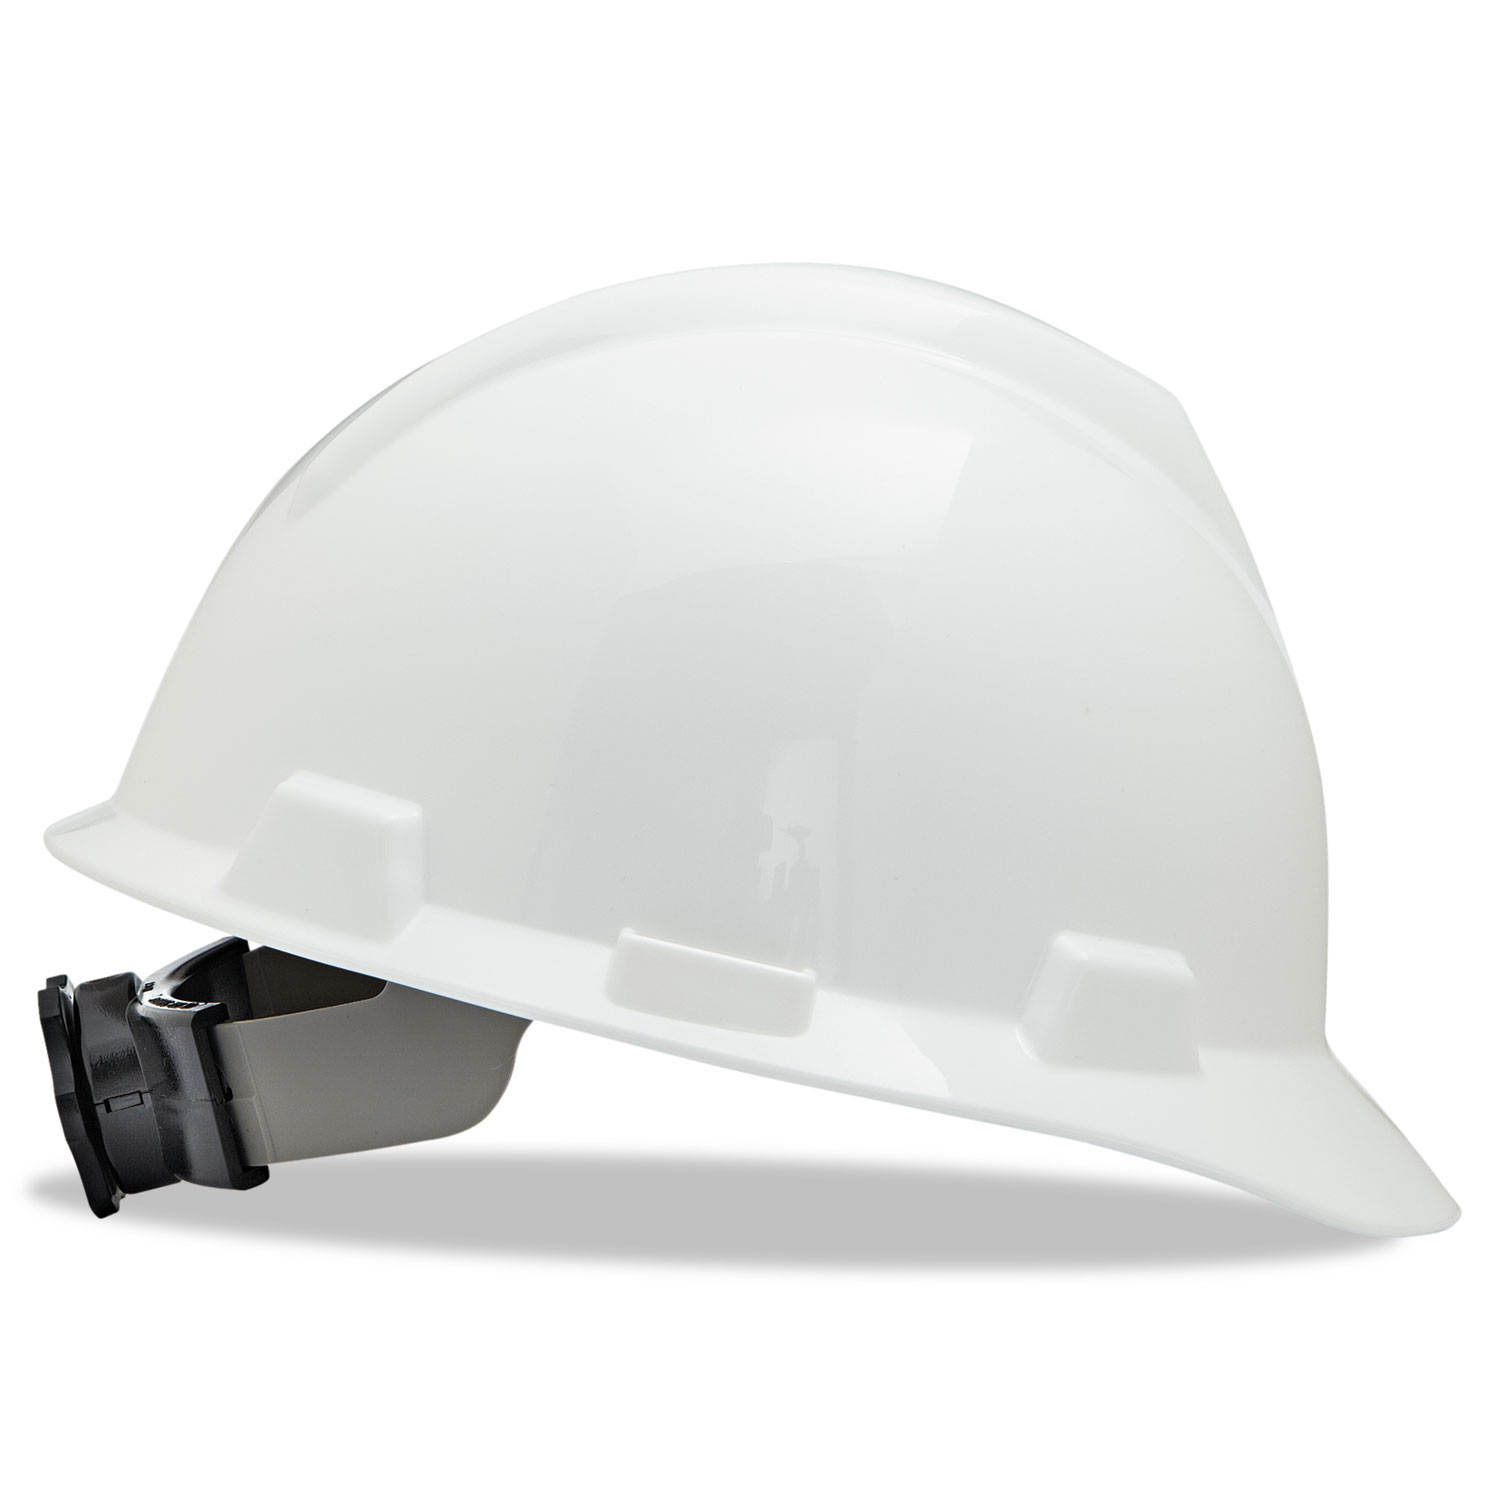  MSA 477482 V-Gard Hard Hats w/Ratchet Suspension, Large Size 7 1/2 - 8 1/2, White (MSA477482) 